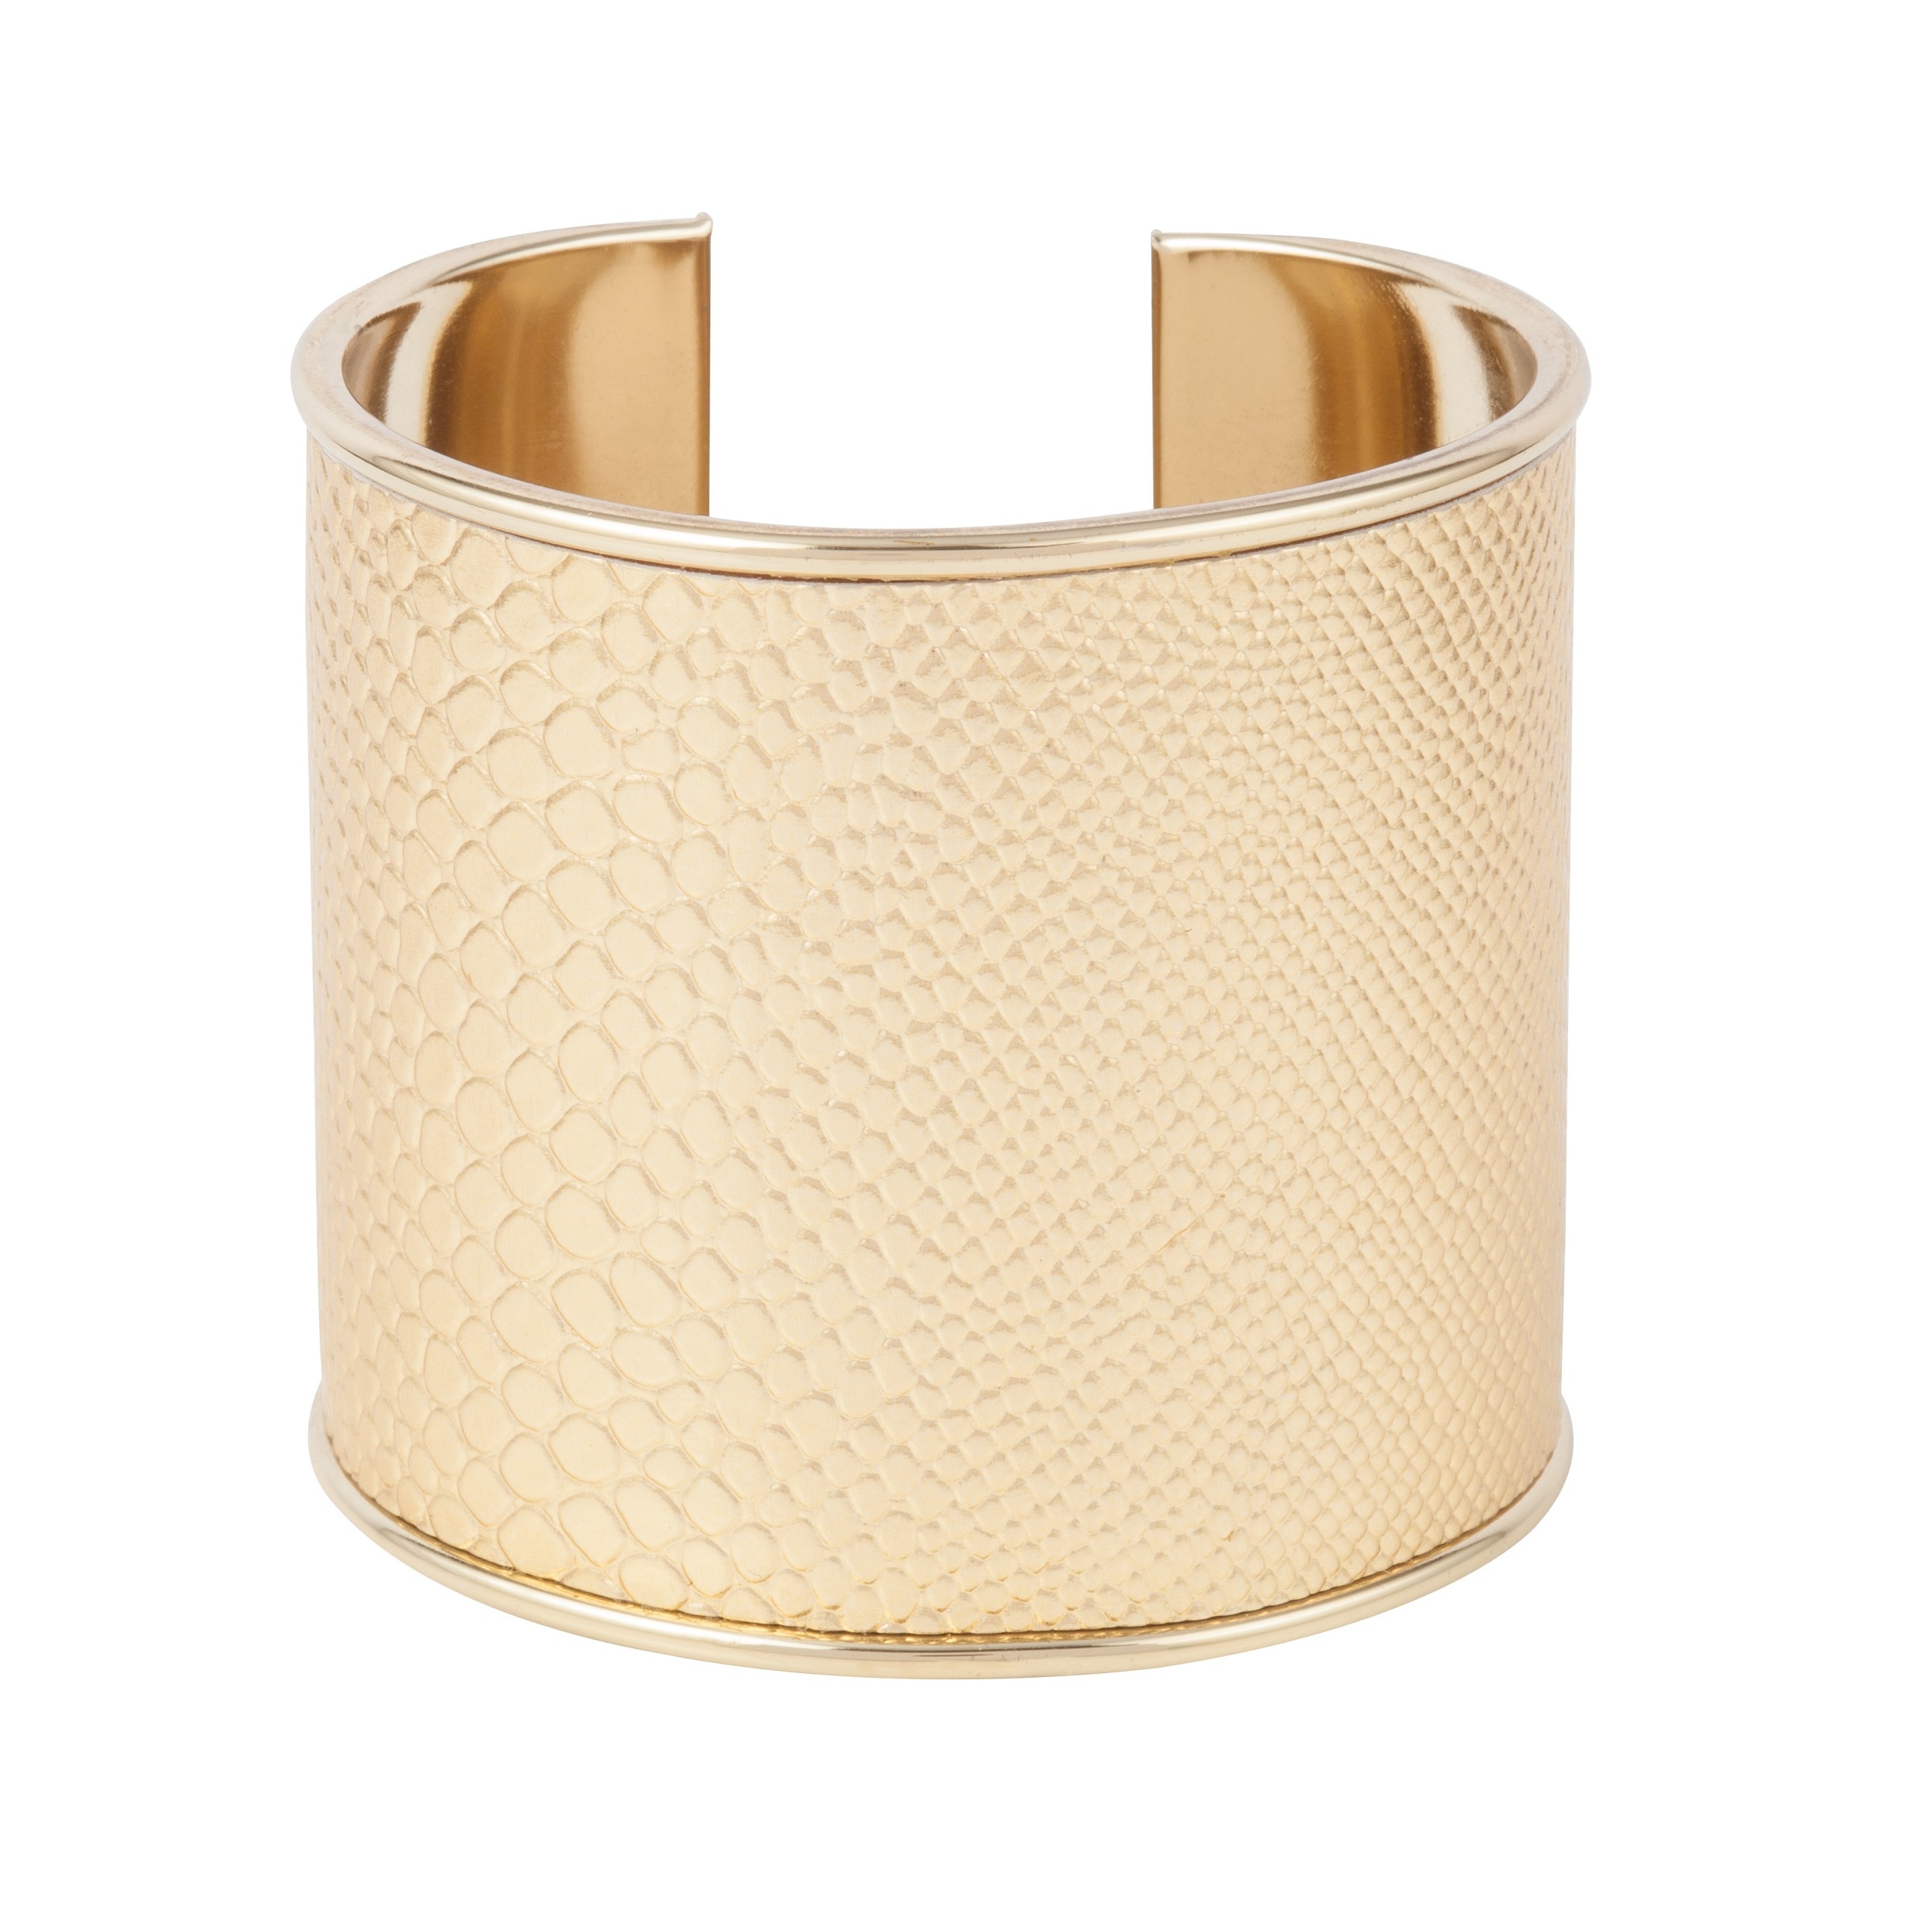 Balmain Large Gold Tone Stephanie Cuff | Cuff, Fashion jewelry, Fashion  accessories